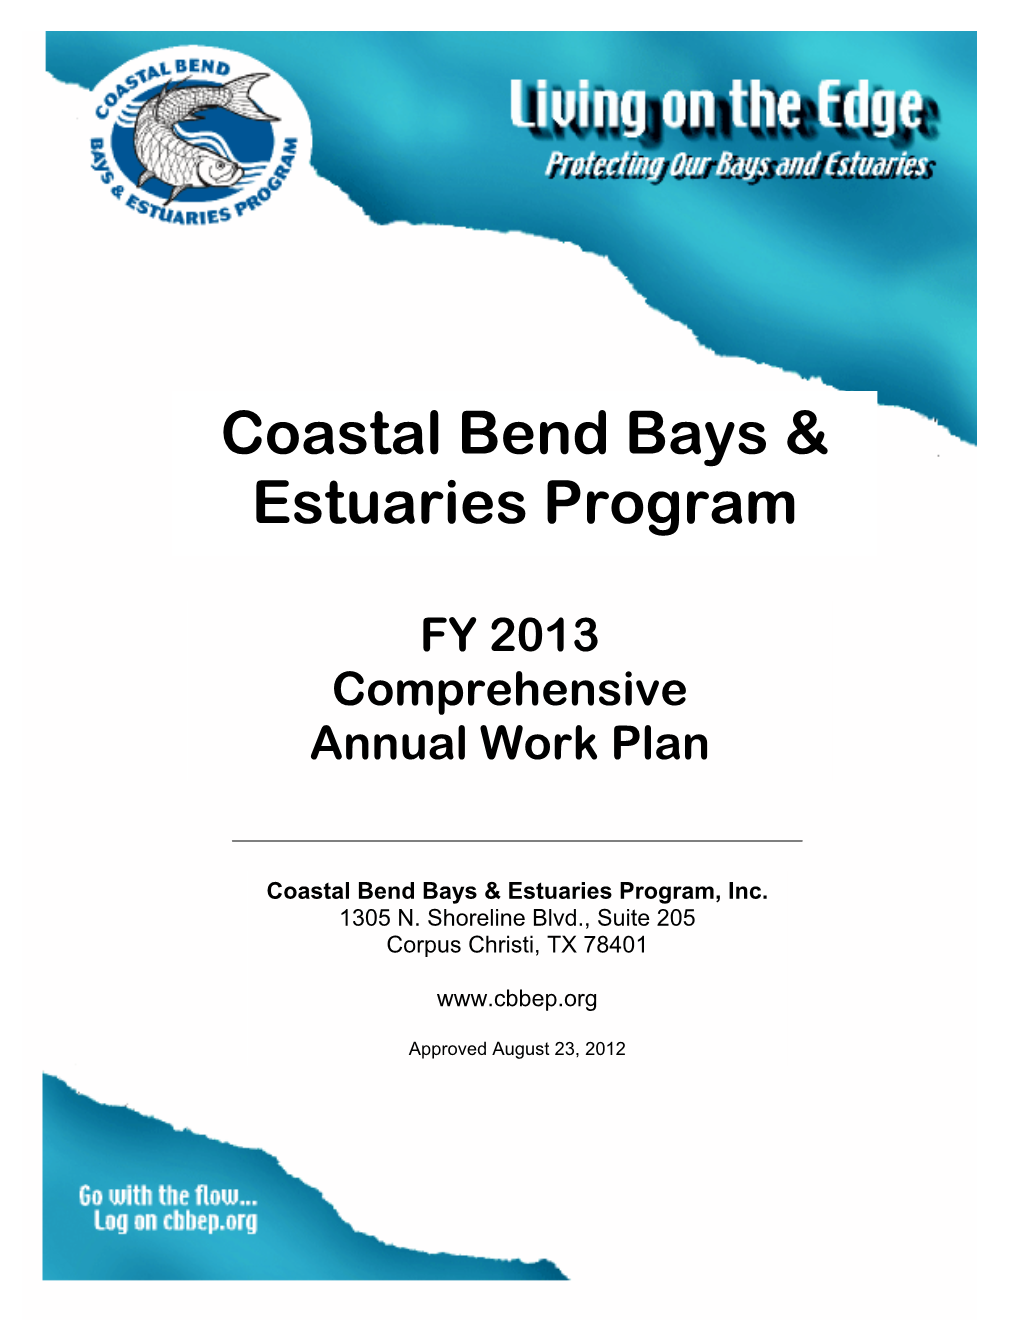 FY 2013 Comprehensive Annual Work Plan